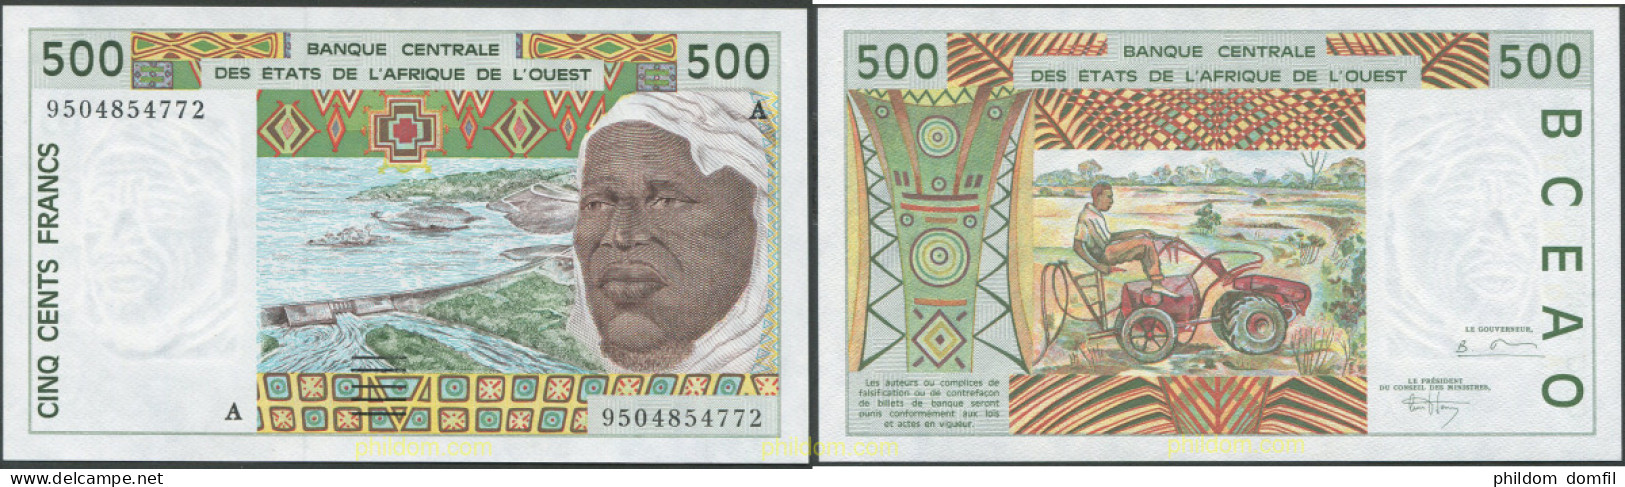 8090 COSTA DE MARFIL 1995 COTE D'IVOIRE WEST AFRICAN STATES 500 FRANCS 1995 A IVORY COAST SIGNATURE 27 - Ivoorkust